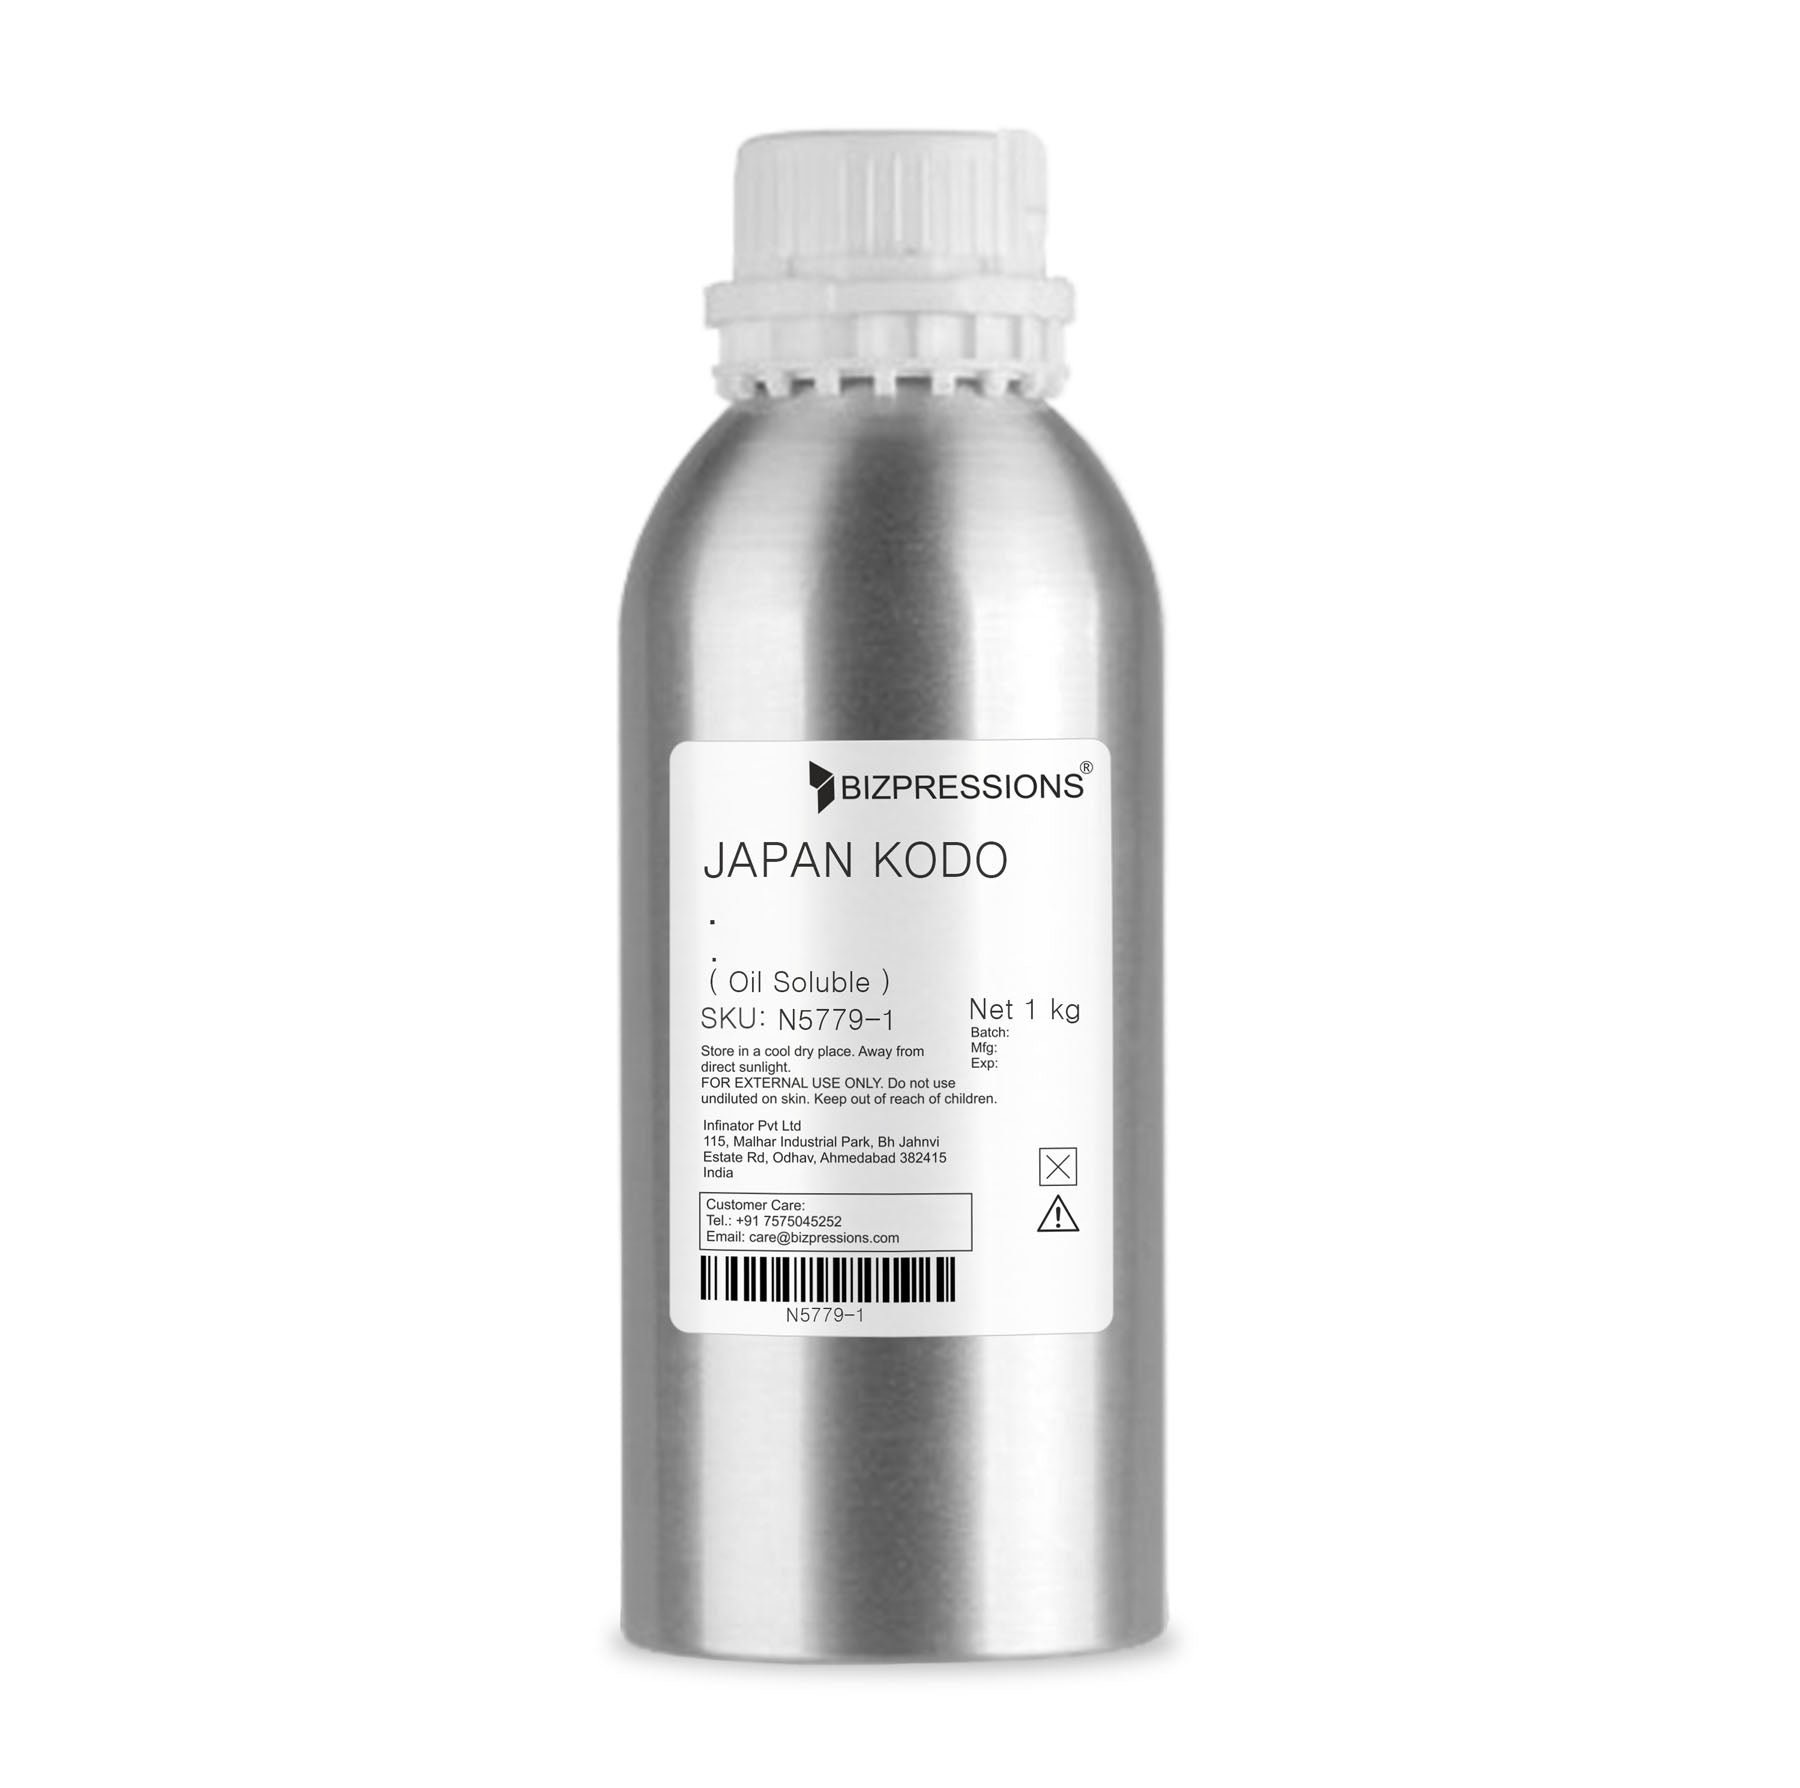 JAPAN KODO - Fragrance ( Oil Soluble ) - 1 kg